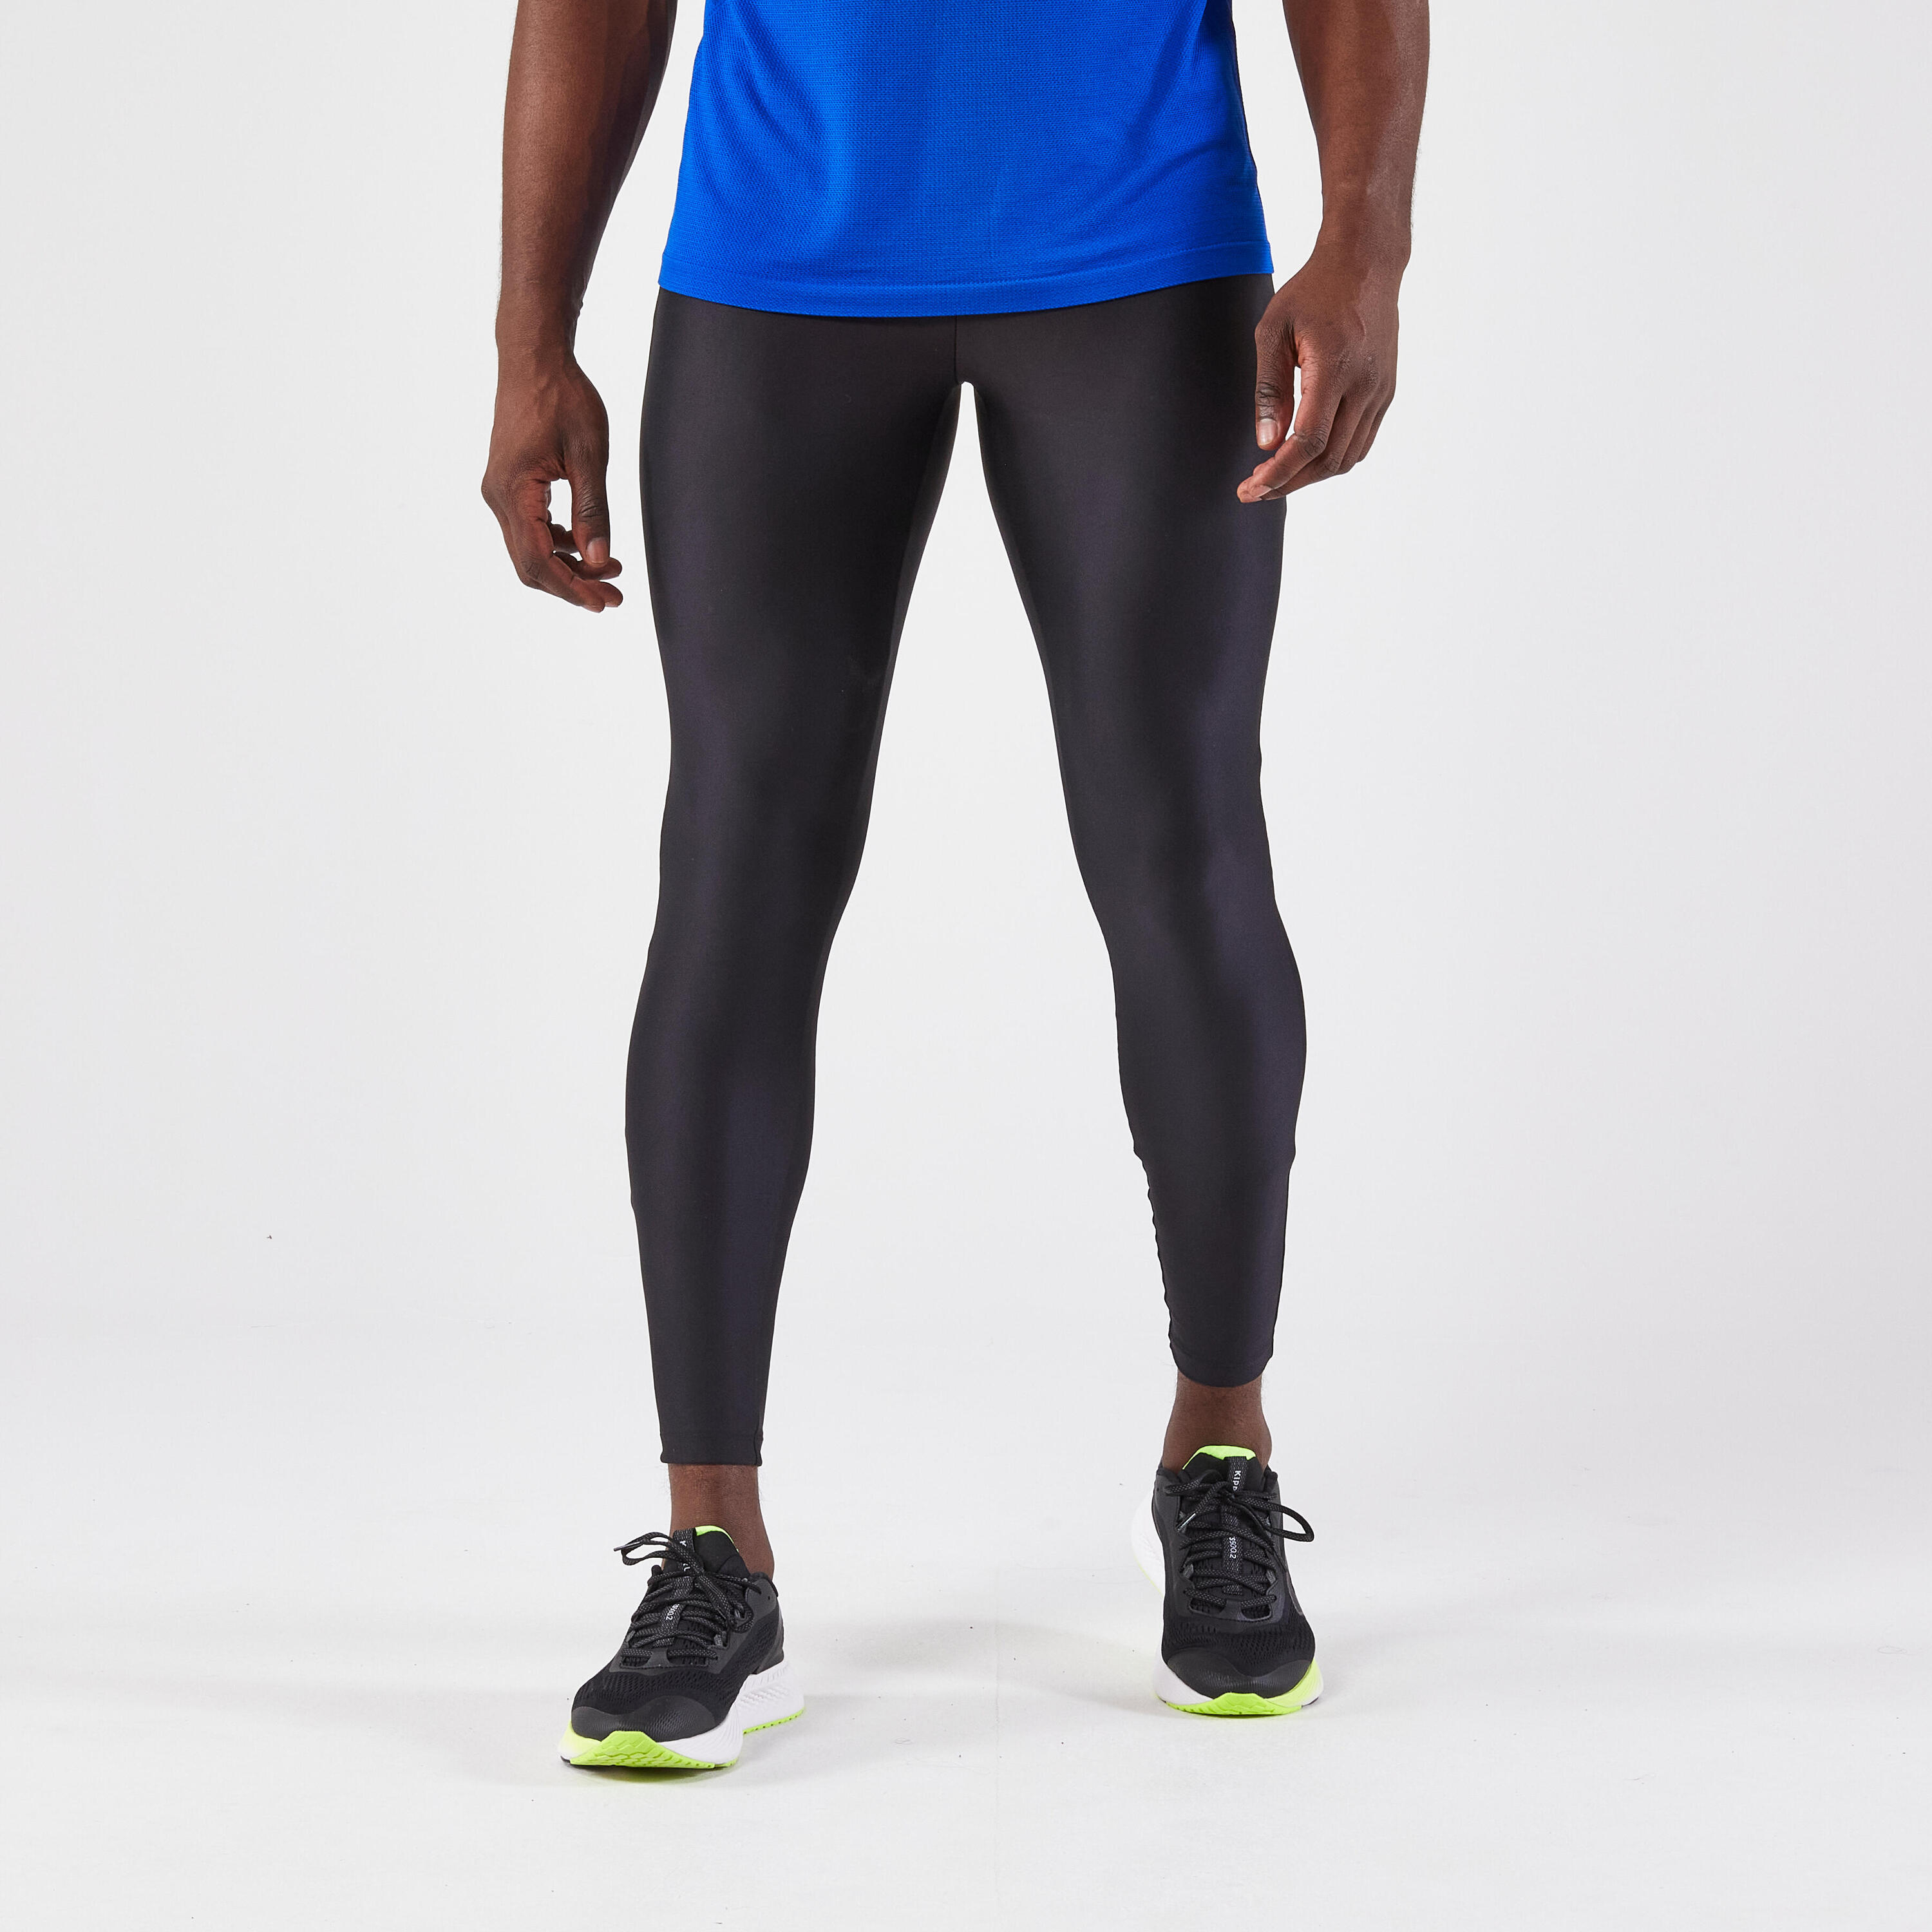 KIPRUN DRY MEN'S RUNNING TIGHTS - BLACK - Decathlon